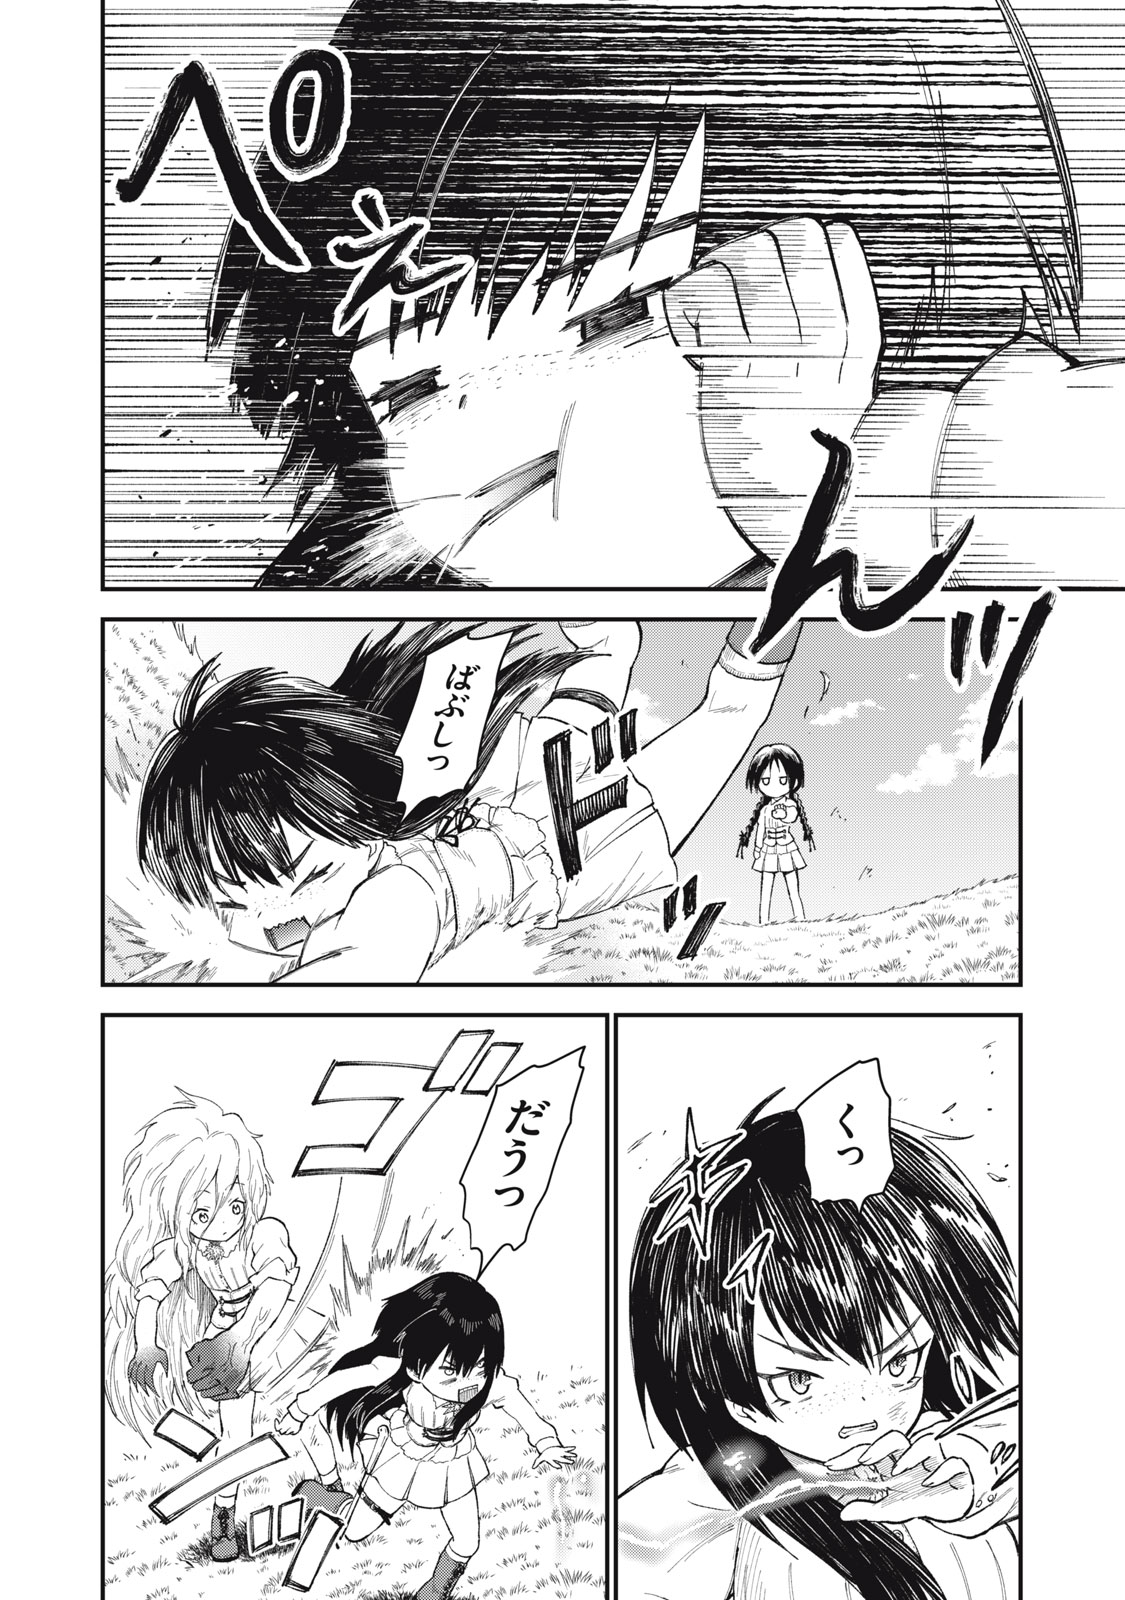 Itadaki no Lvitsa - Chapter 13 - Page 14